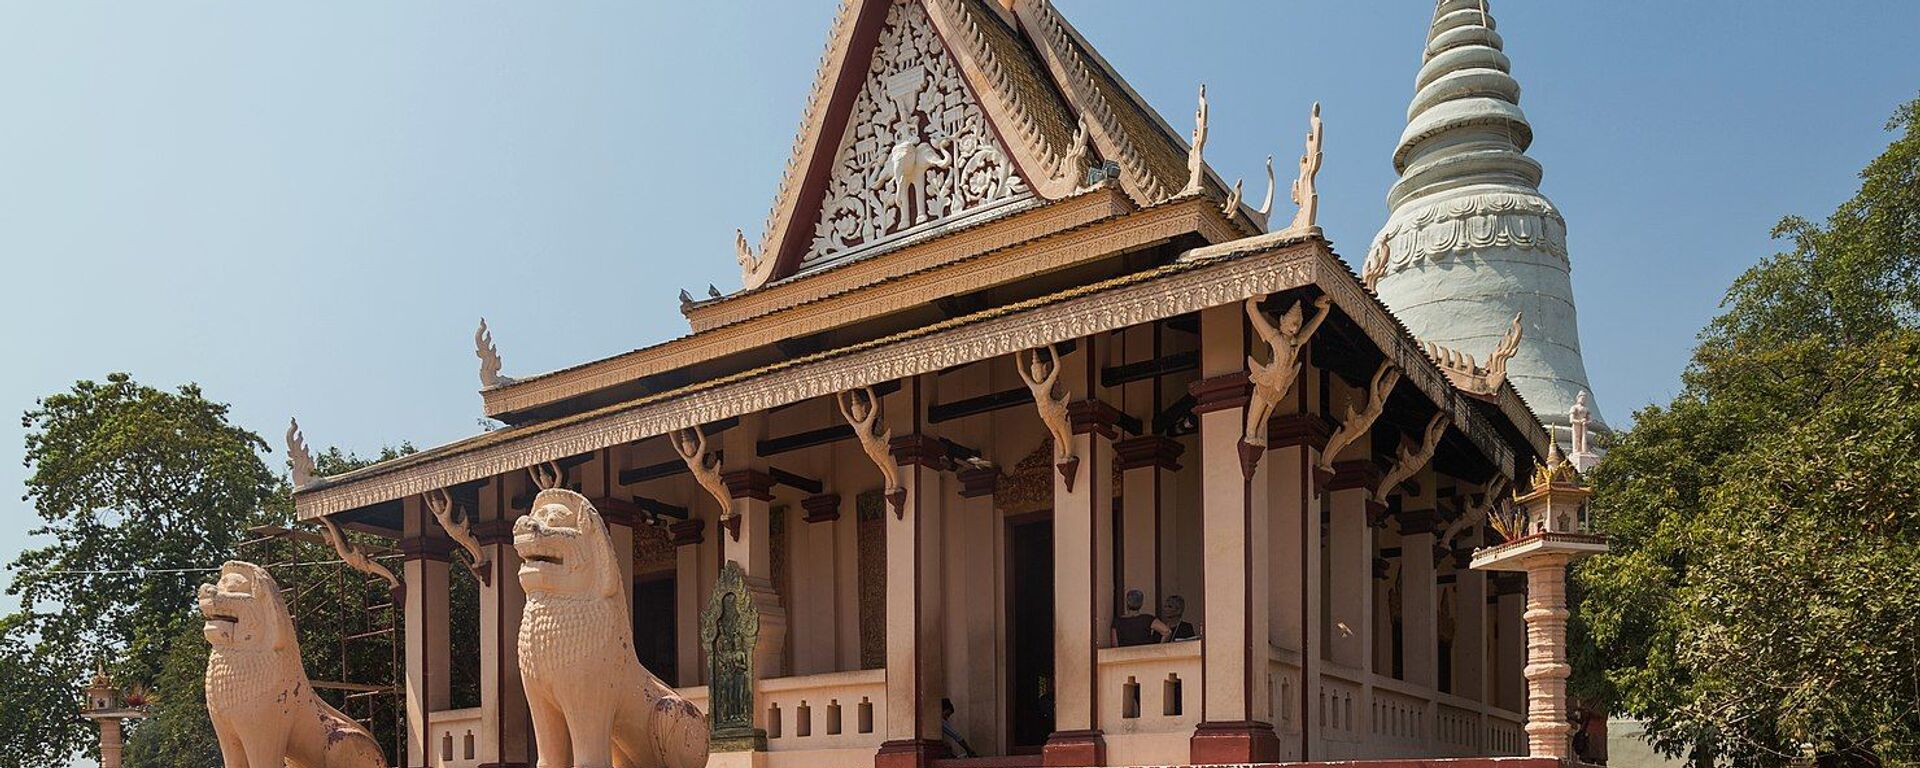 Chùa Wat Phnom - Sputnik Việt Nam, 1920, 18.02.2022